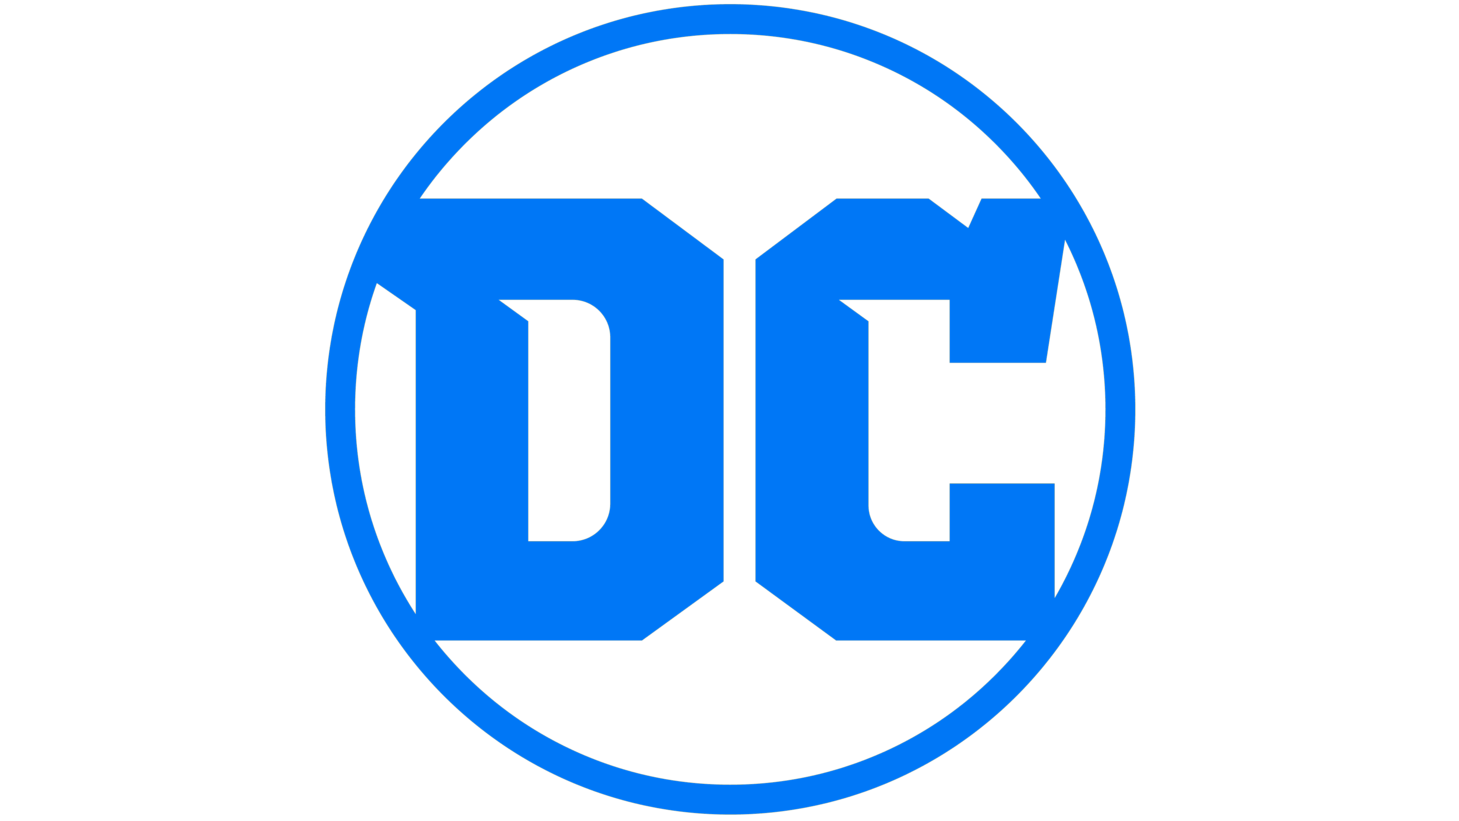 Dc comics sign